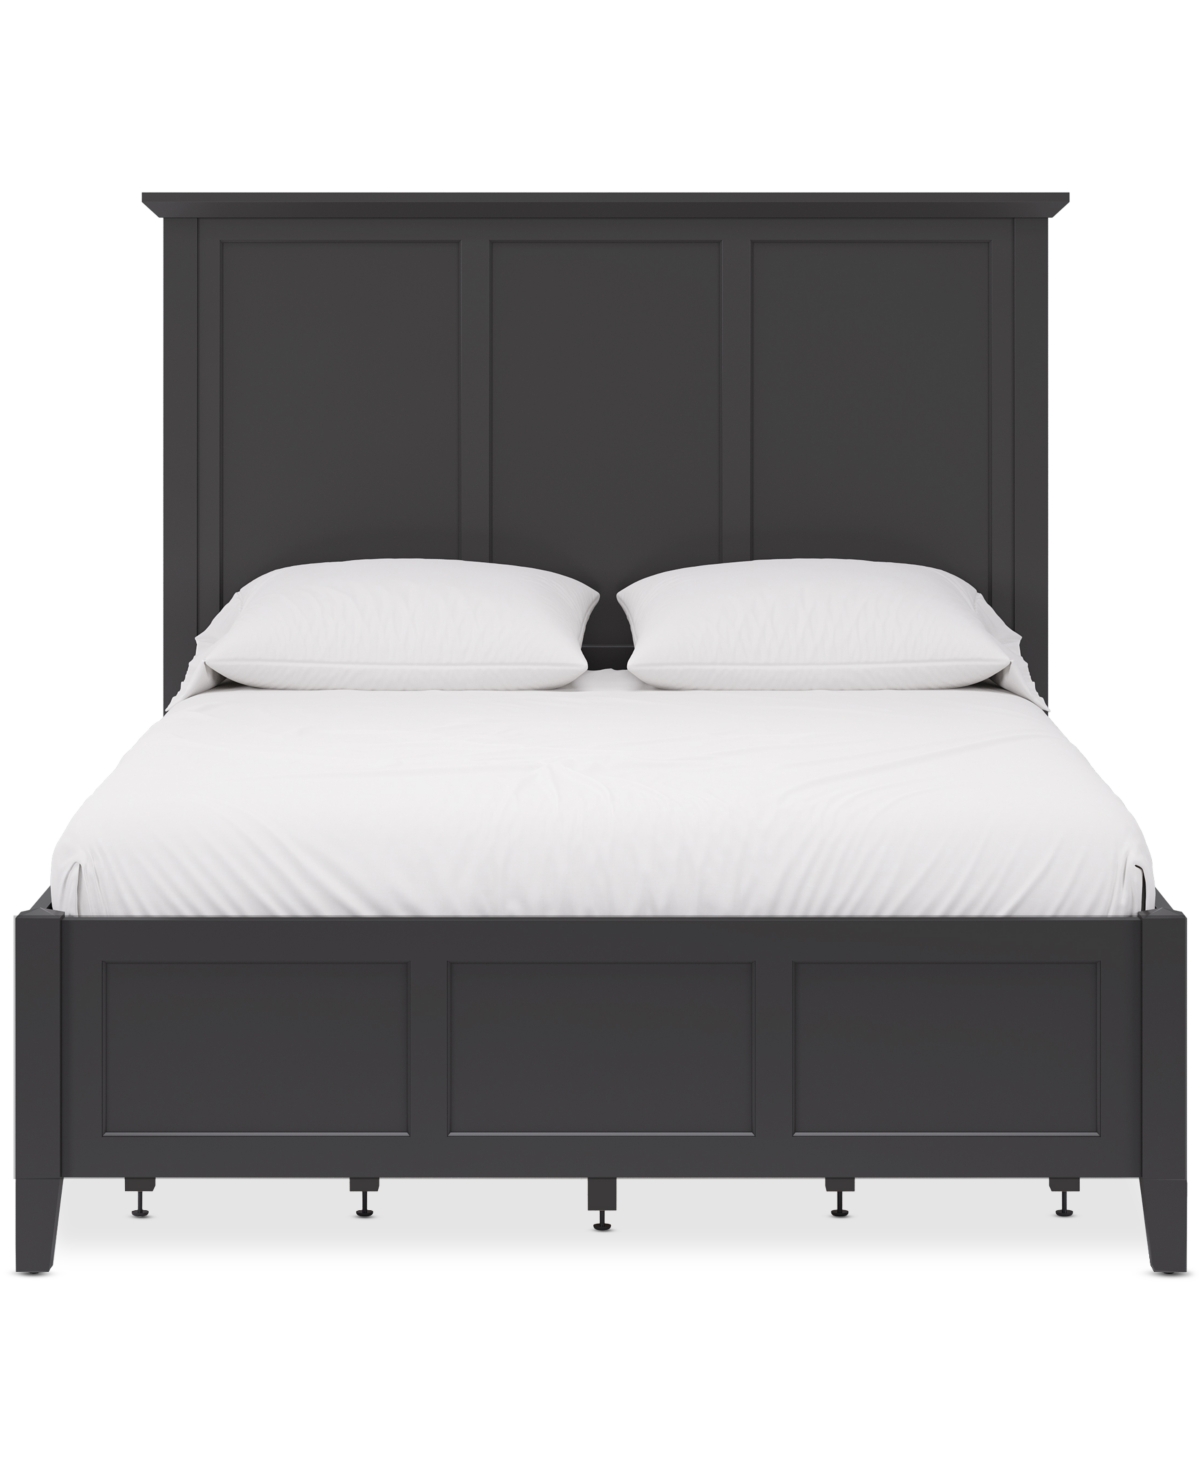 Furniture Hedworth Queen Storage Bed In Black